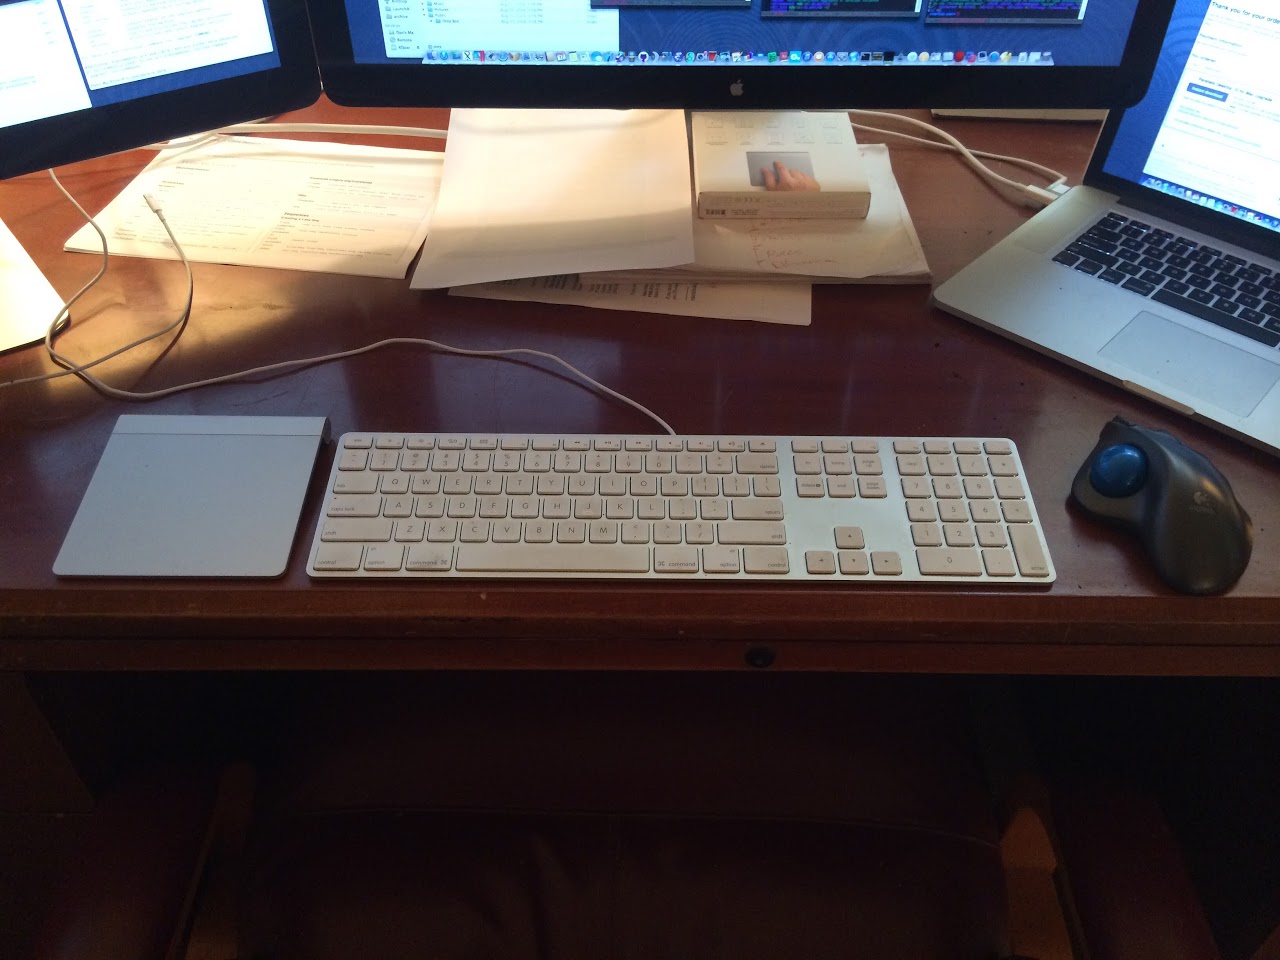 mac programer display and keyboard setup 69189 dan lentz